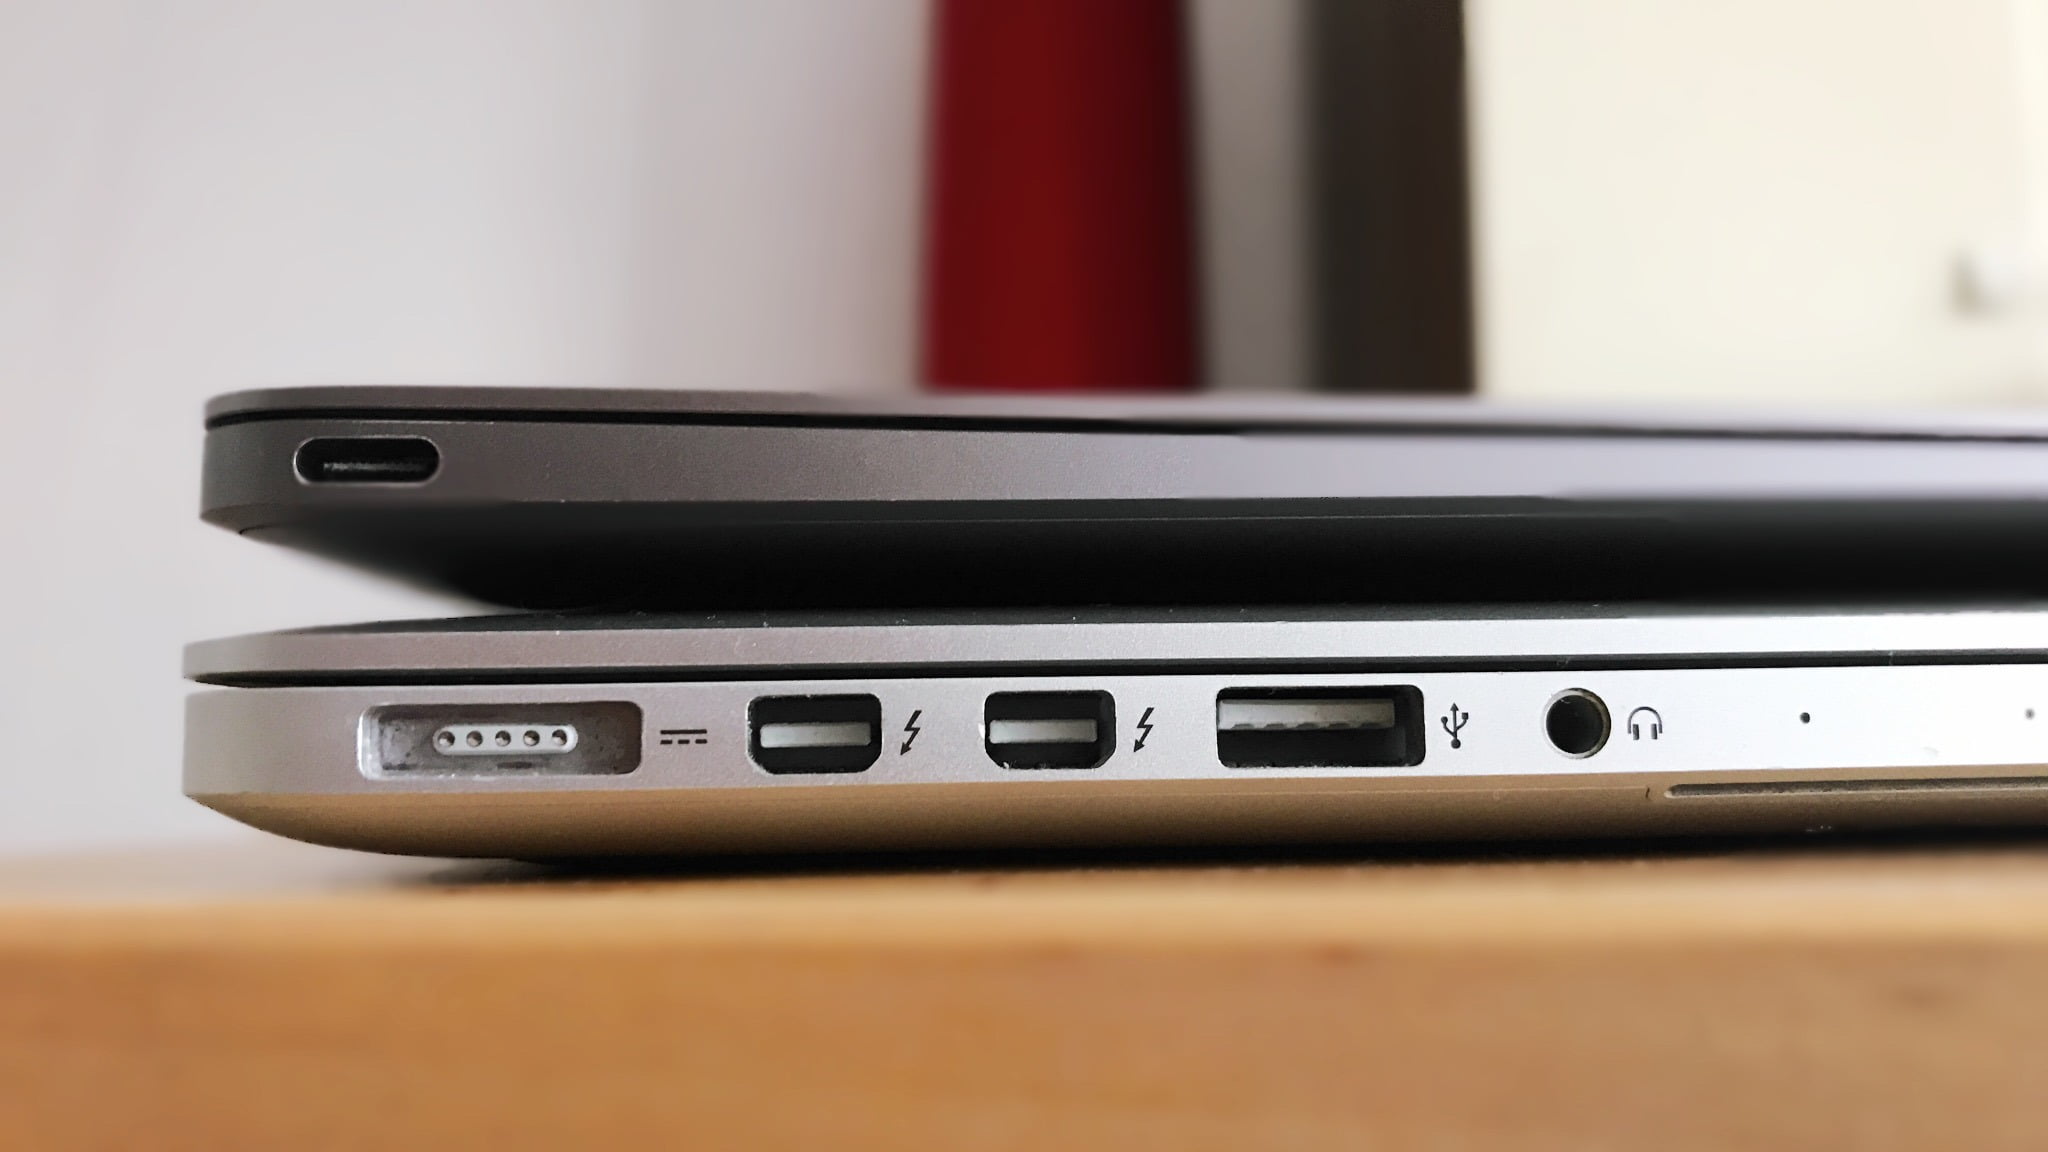 Macbook USB Ports USB-C USB-A